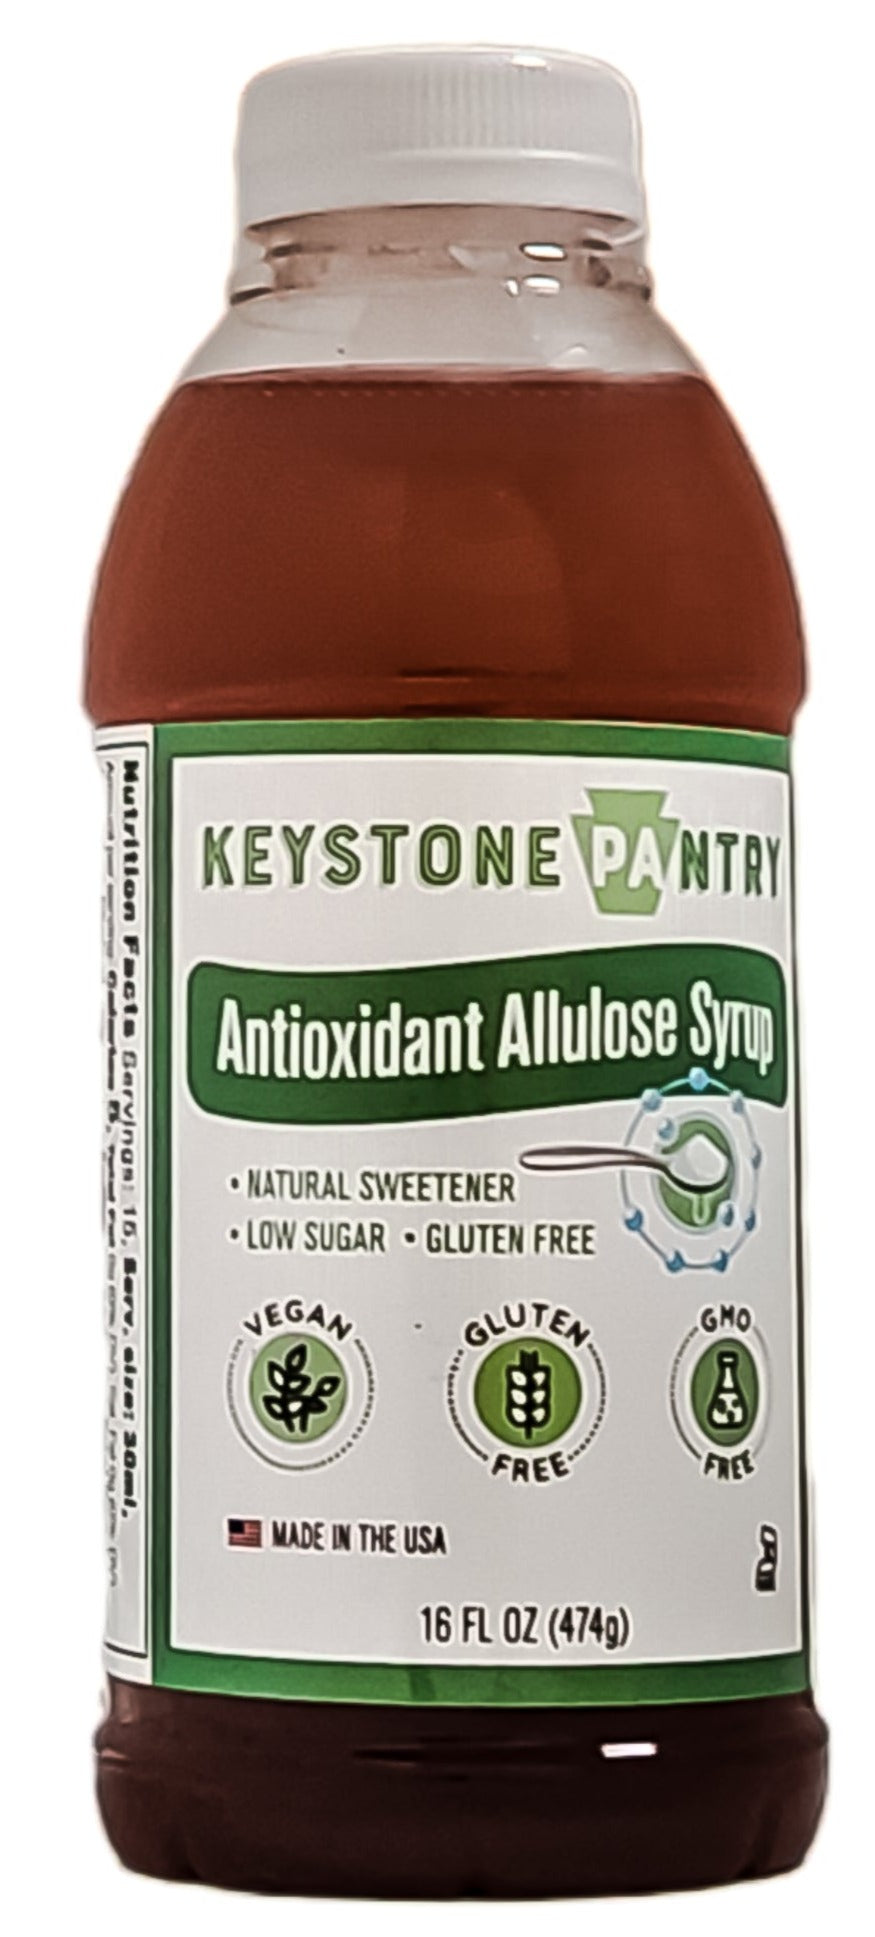 Keystone Pantry's Natural Sugar Alternative with Antioxidant Benefits